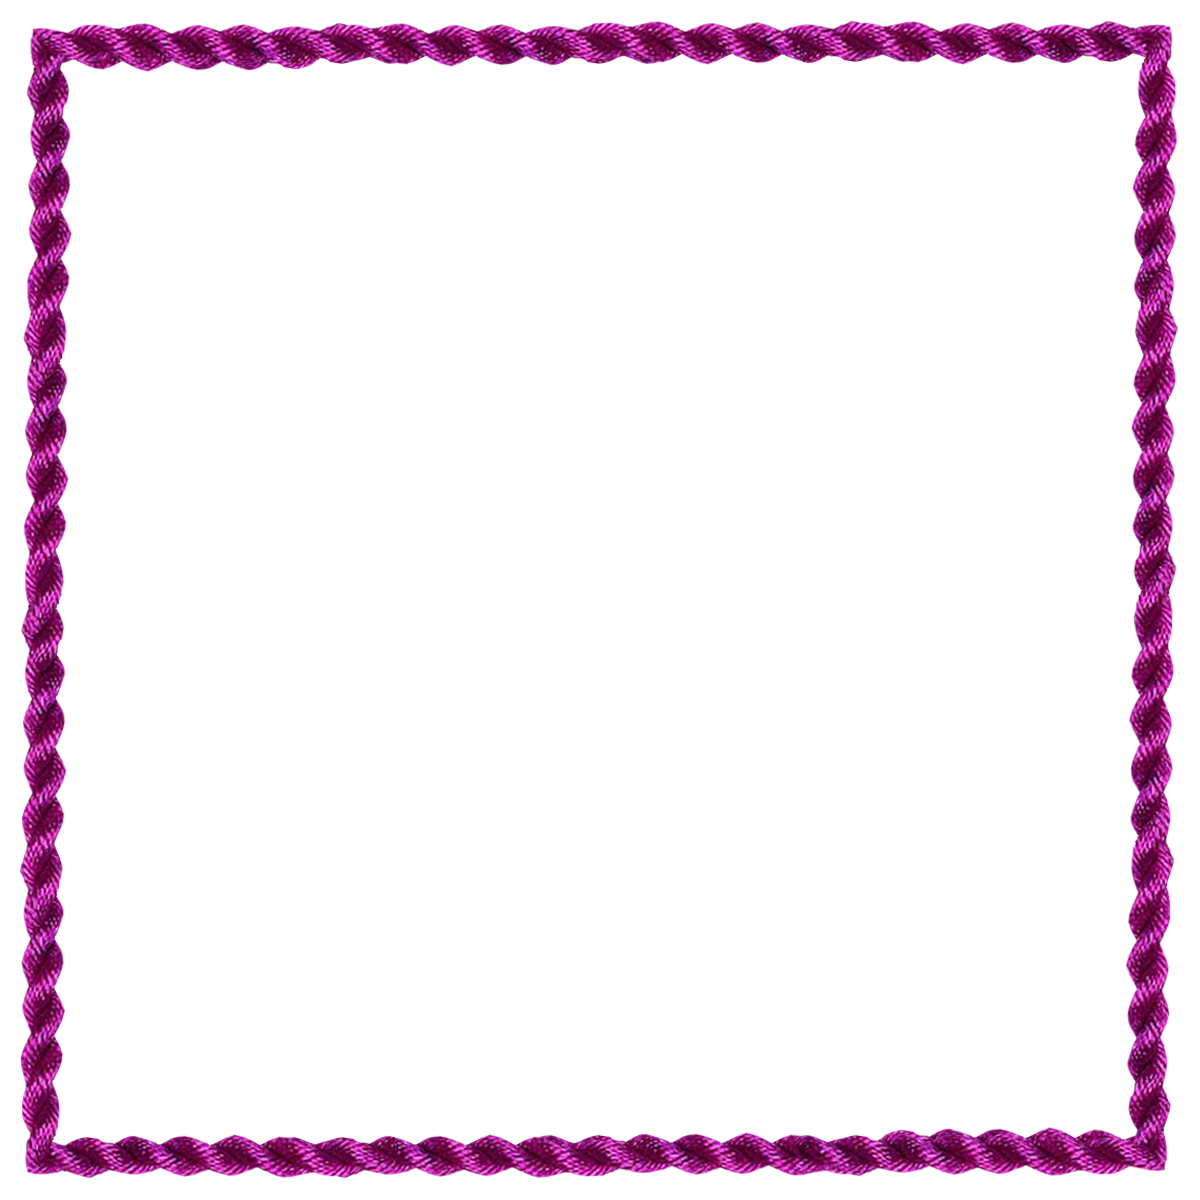 Fuchsia Border Frame Transparent PNG Image